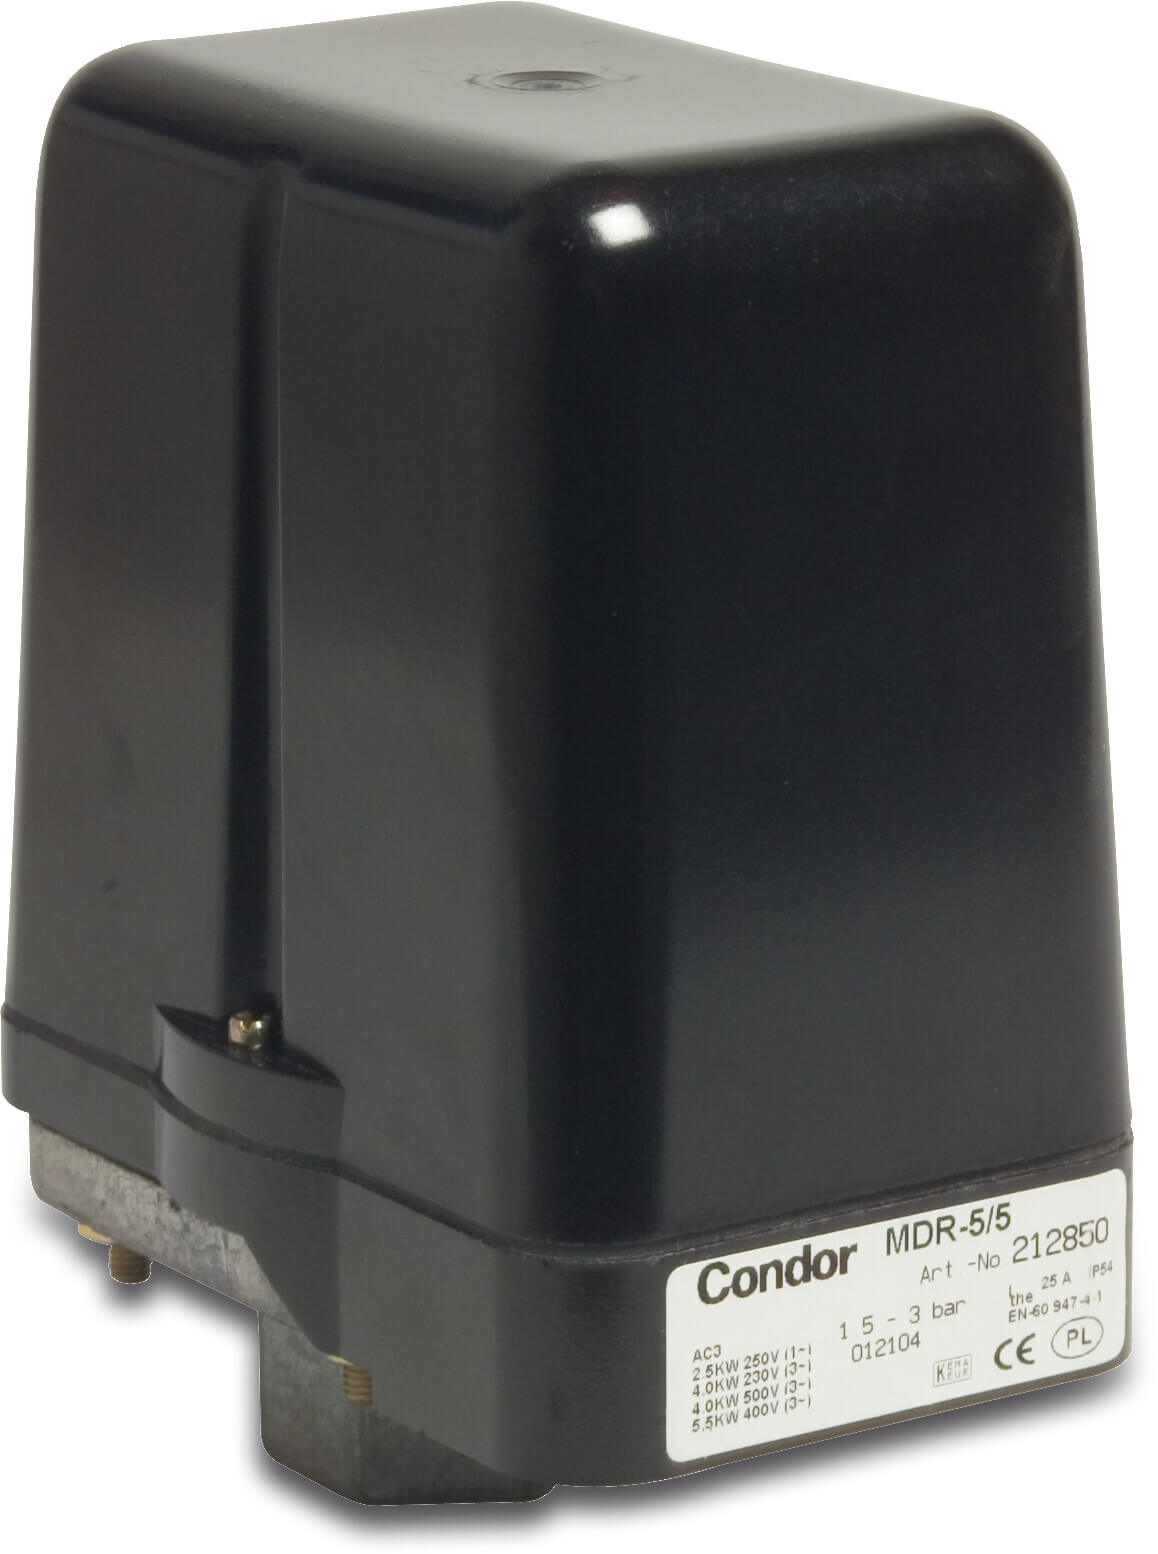 Condor Pressure switch 1/2" female thread 25A 230/400VAC type MDR 5-5